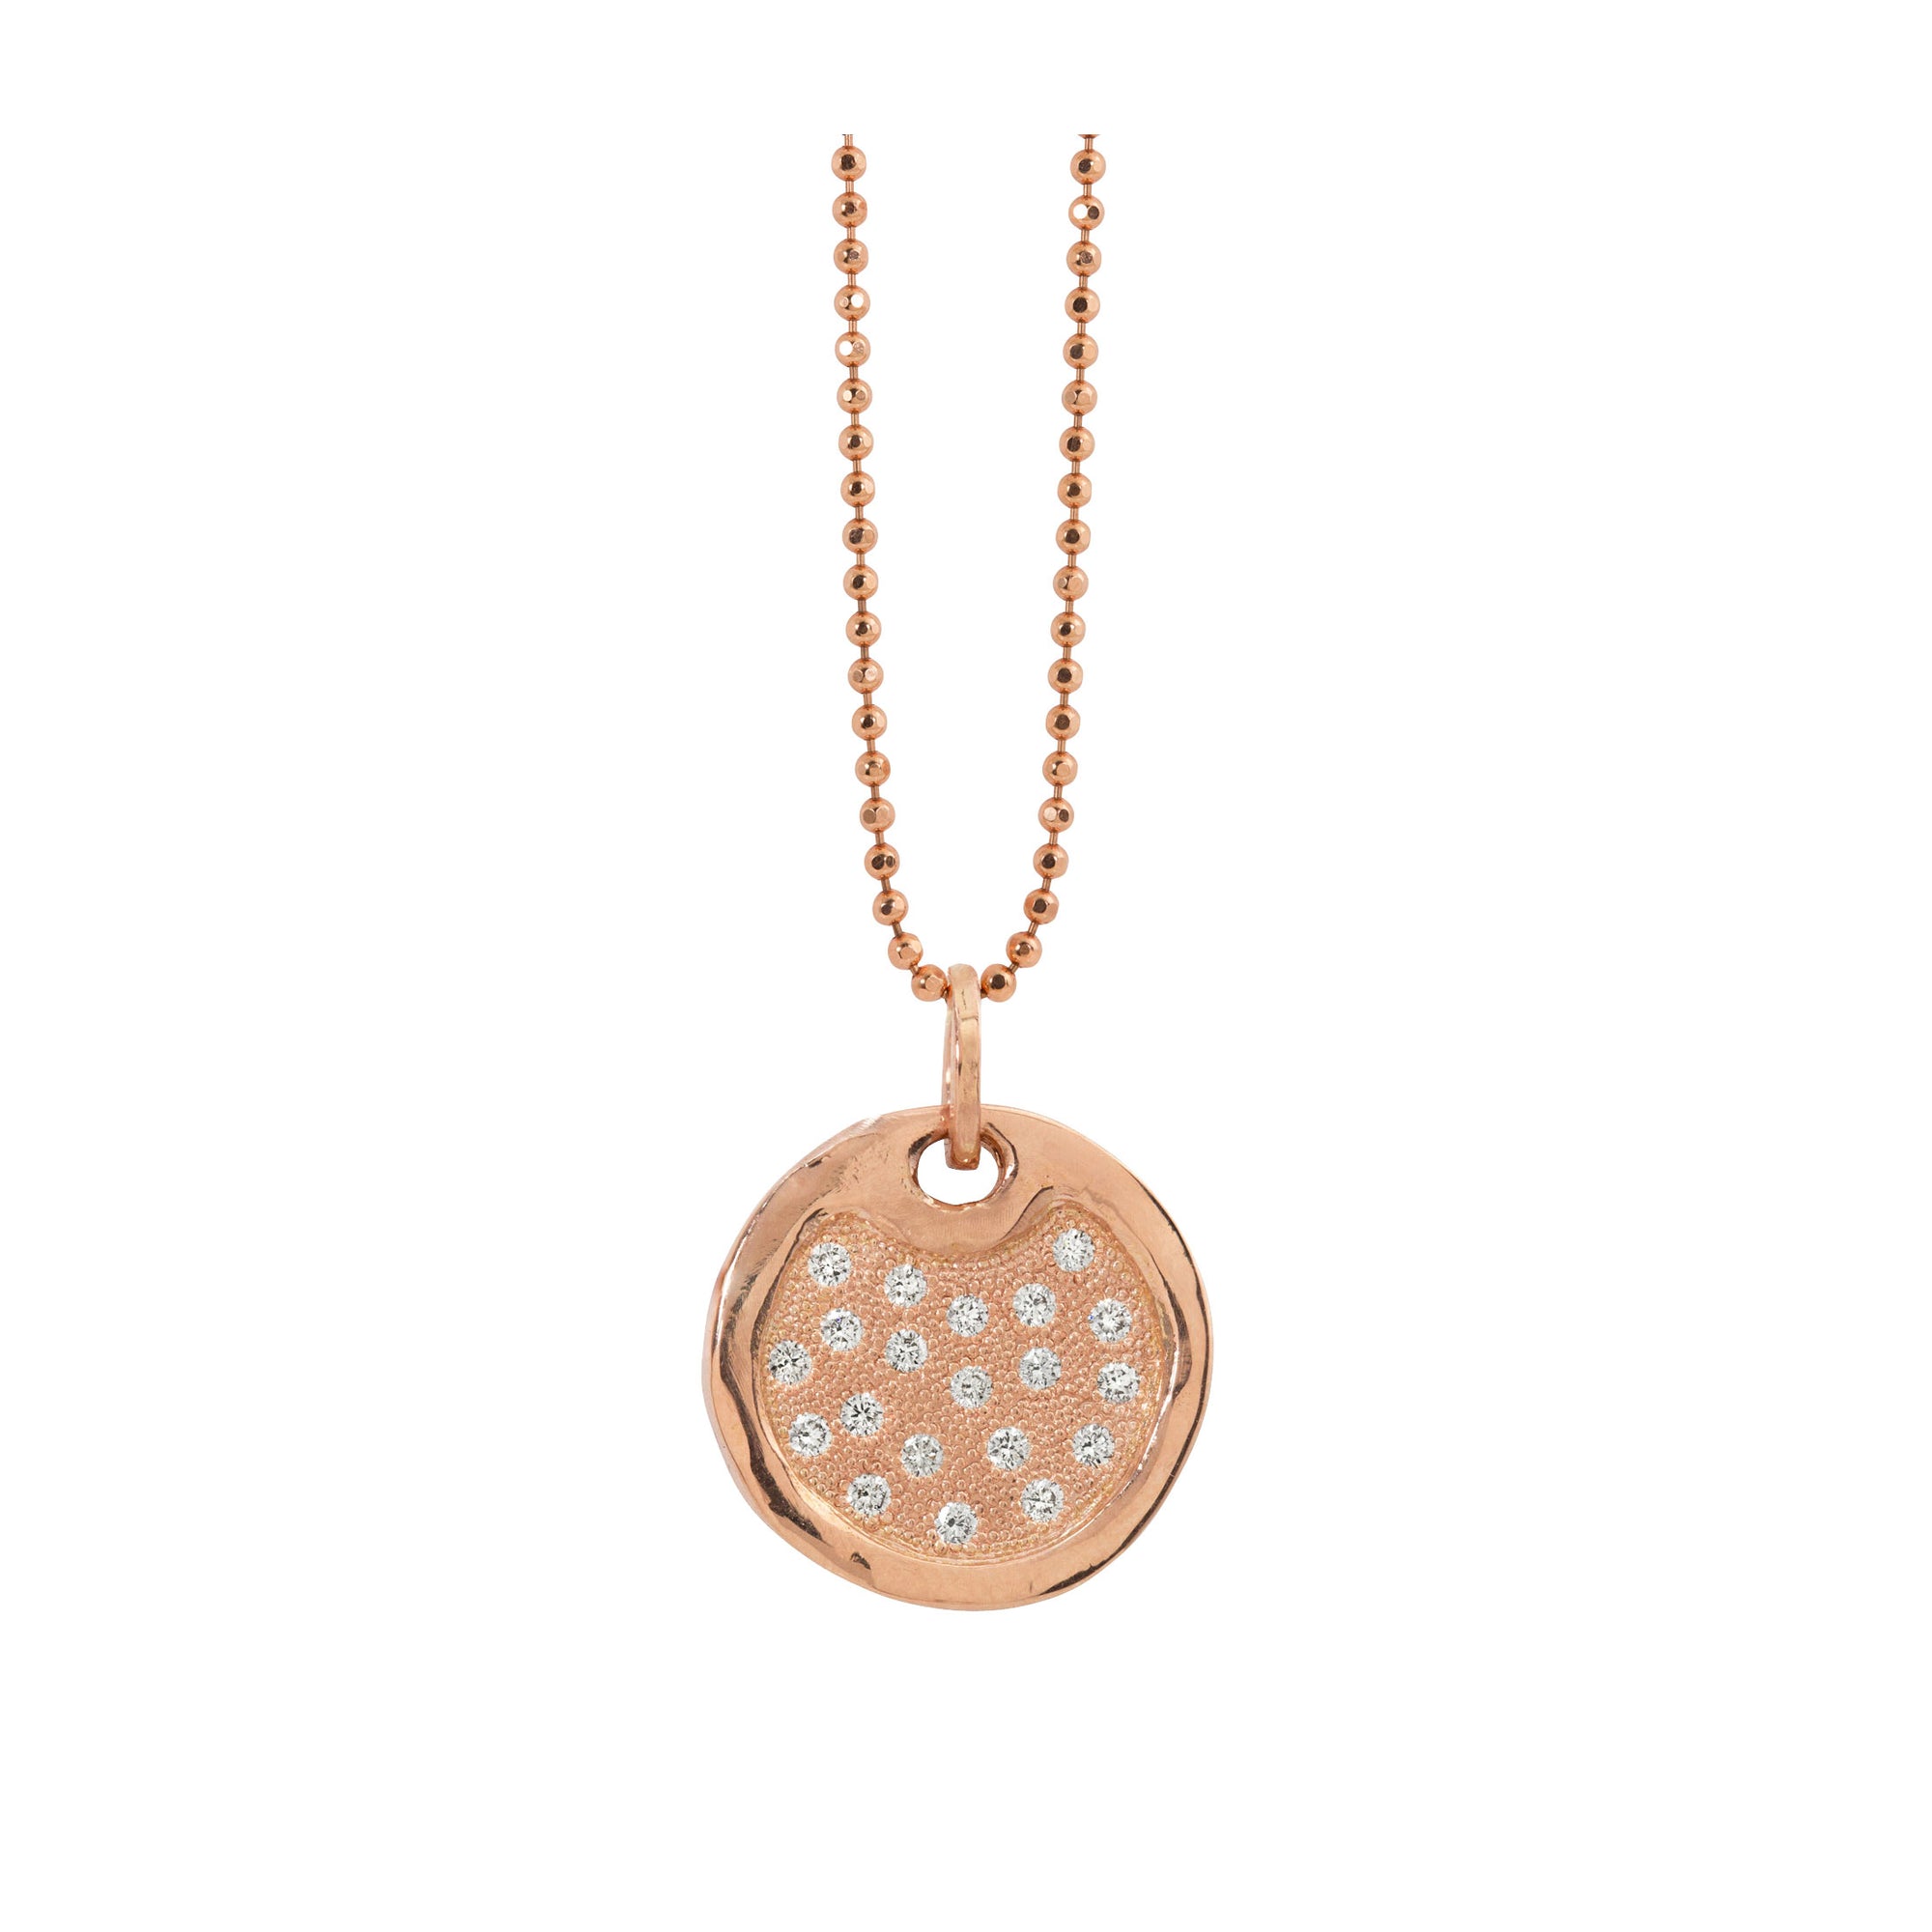 14k rose gold medium DENA pendant with scattered diamonds